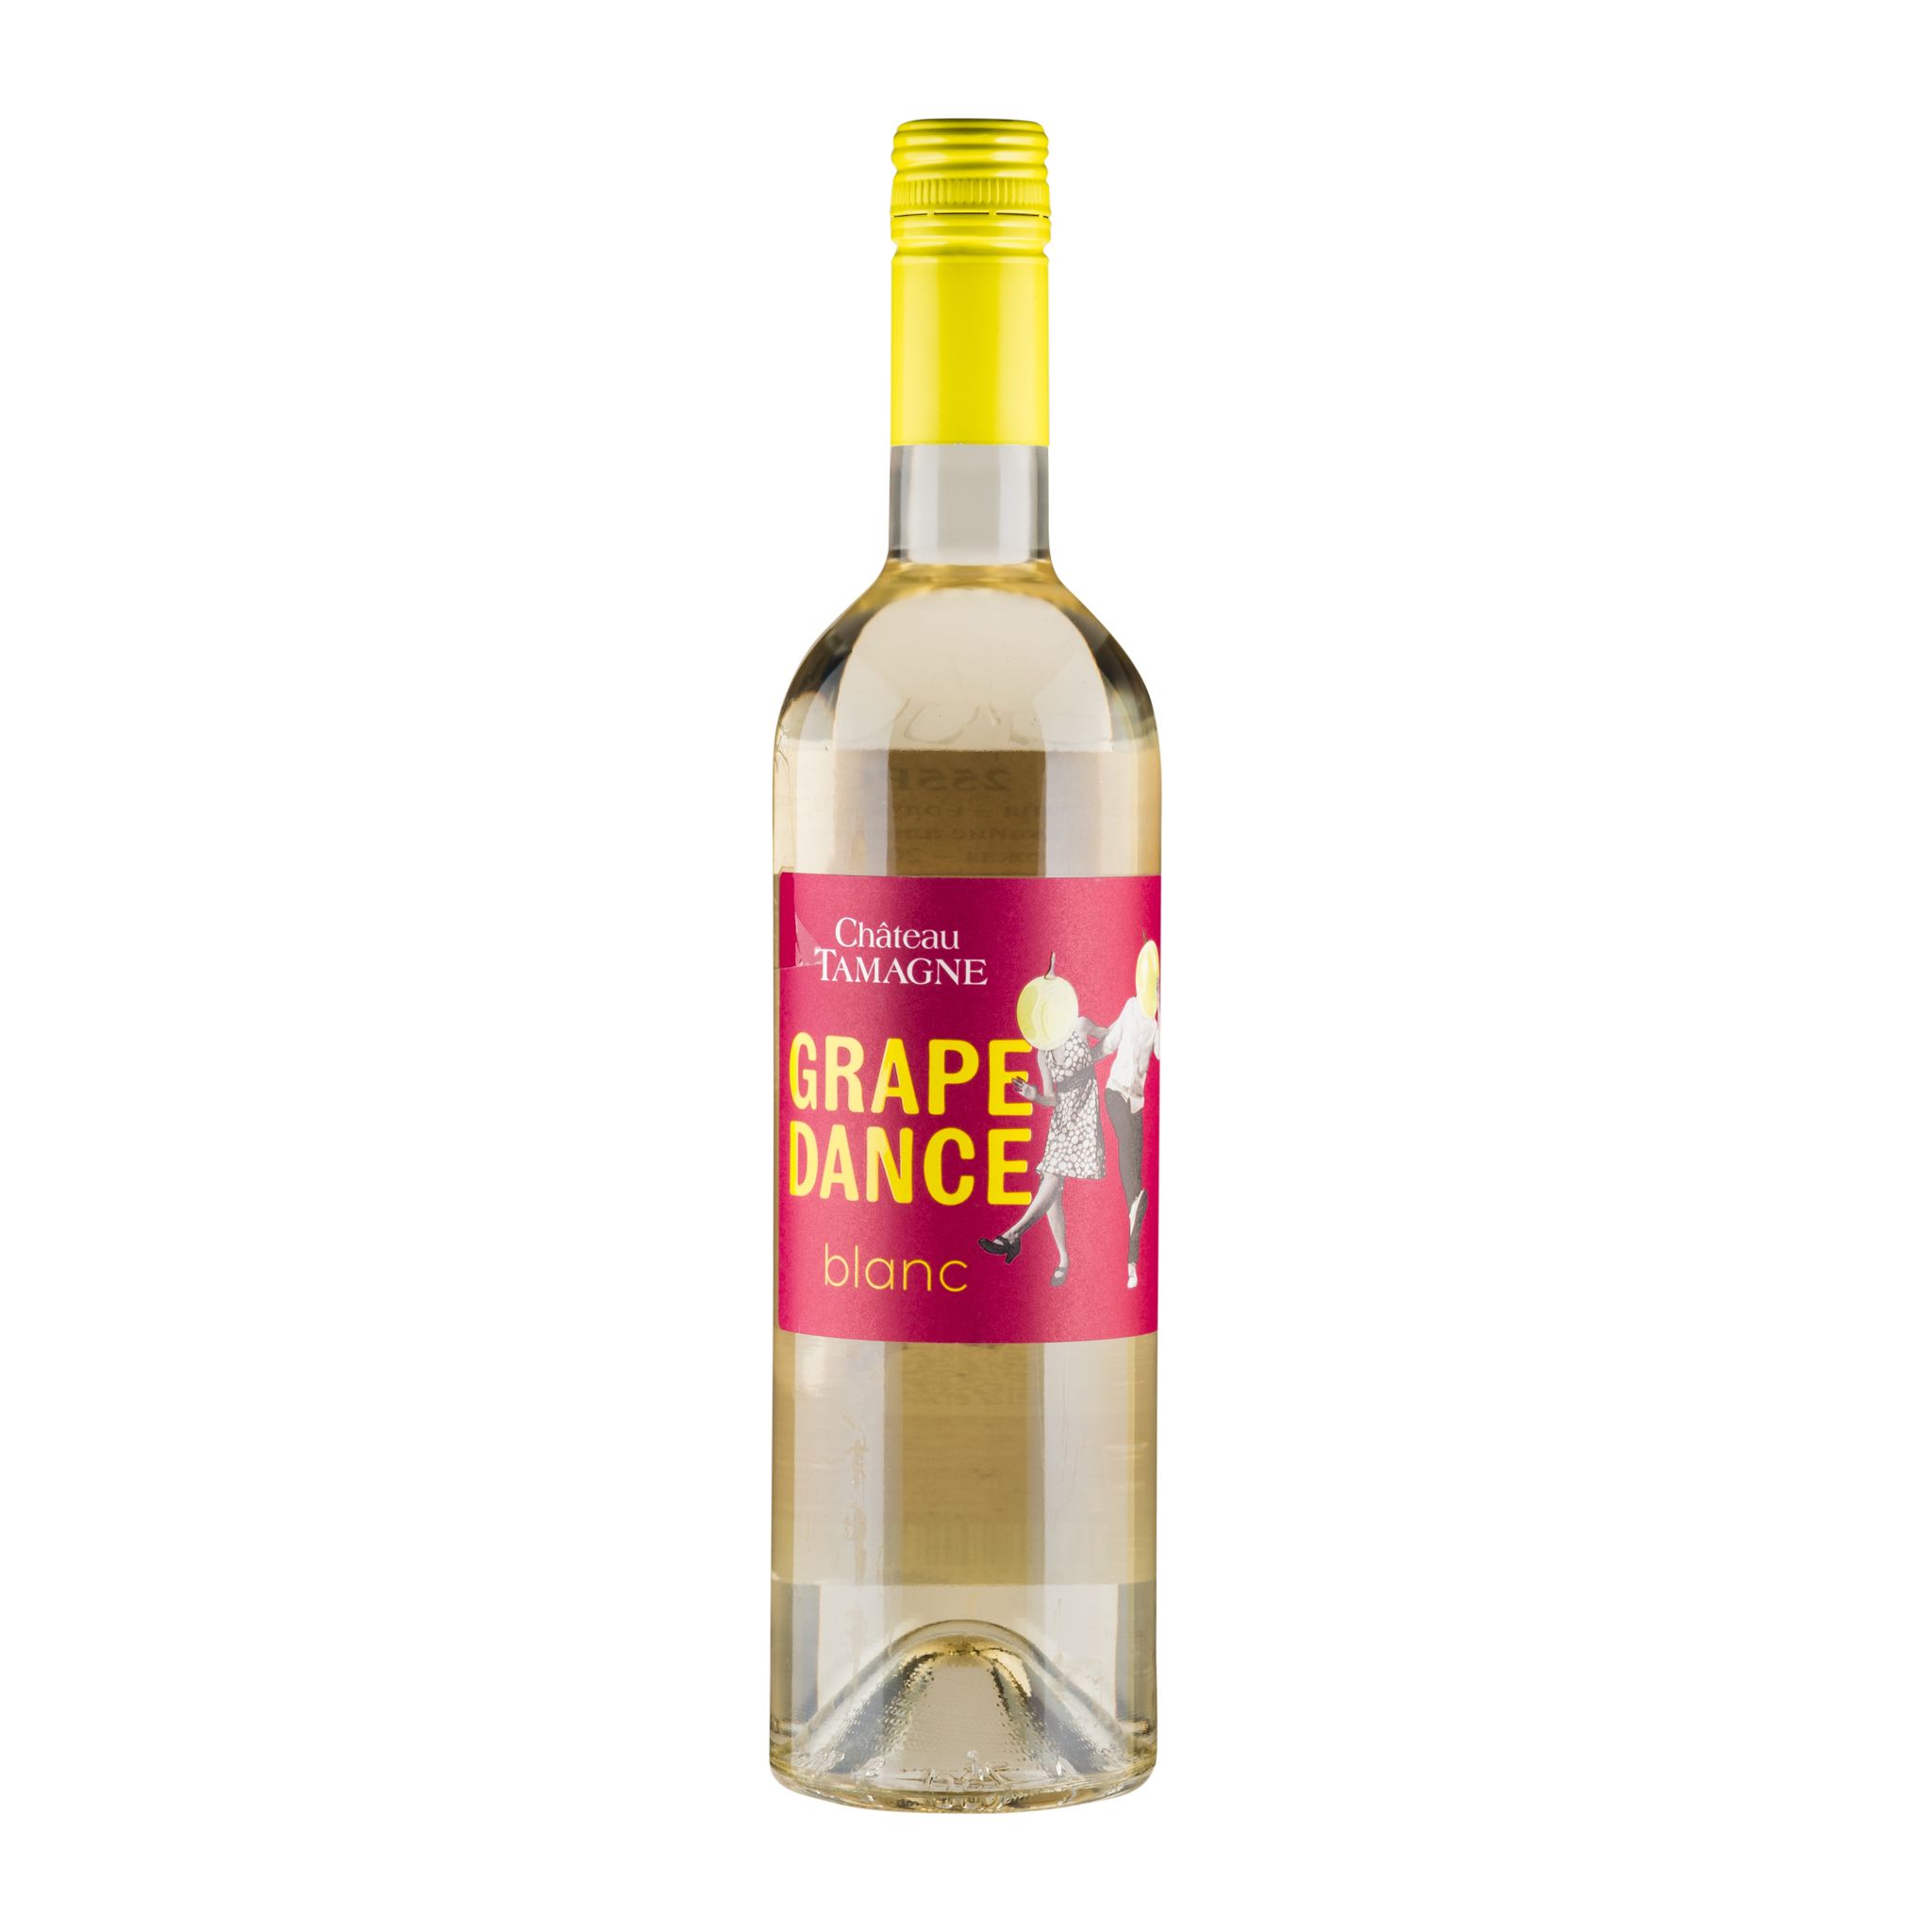 Вино шато тамань грейп. Grape Dance Chateau Tamagne. Вино Шато Тамань грейп дэнс белое полусухое. Грейп дэнс Шато Тамань белое. Вино Кубань Таманский полуостров.